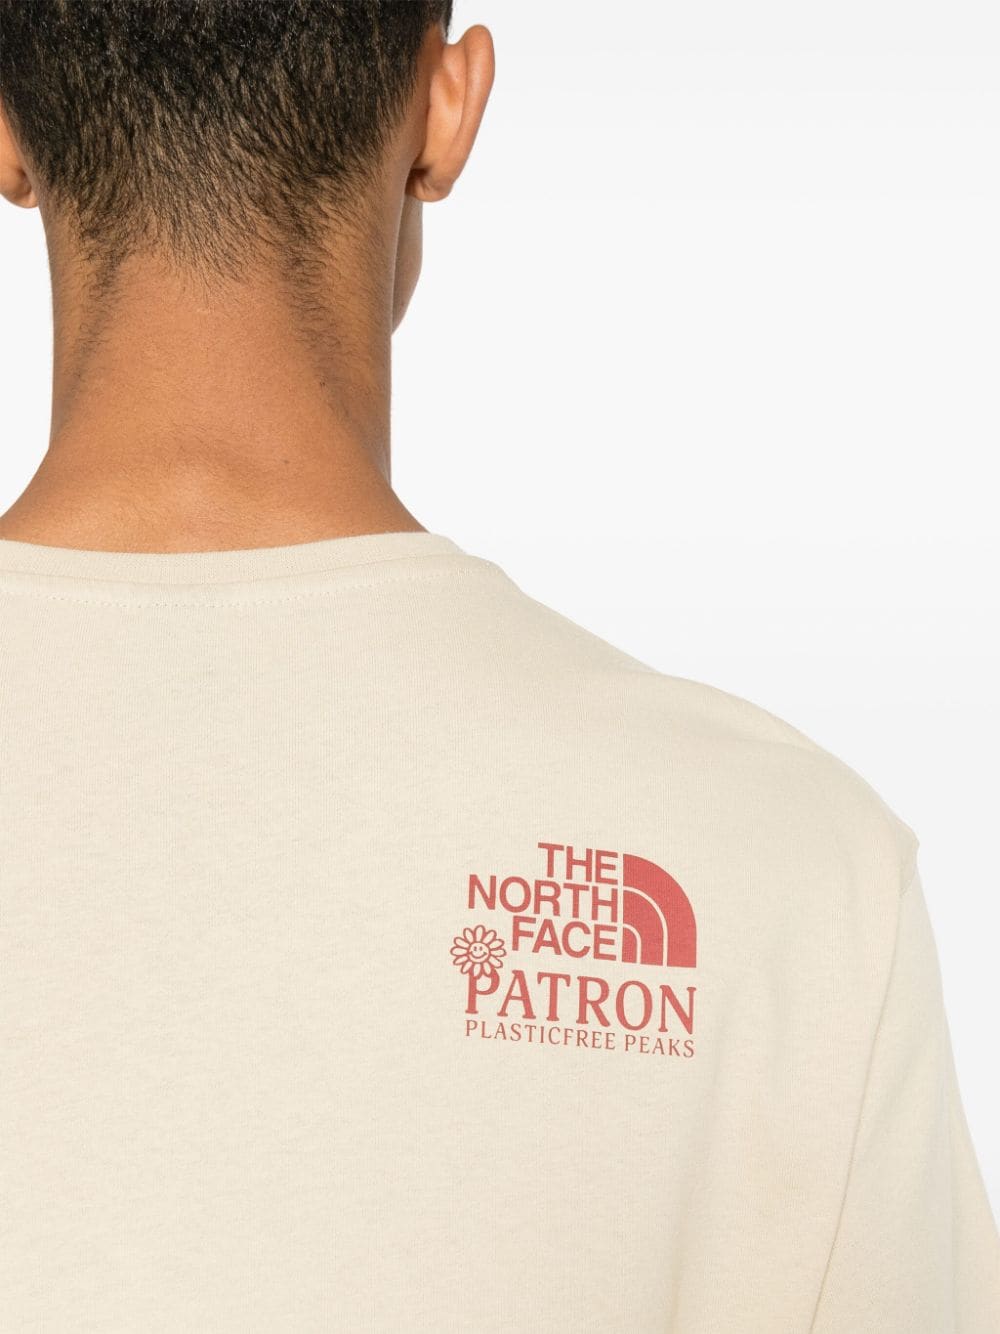 The North Face x Patron Nature katoenen T-shirt Beige